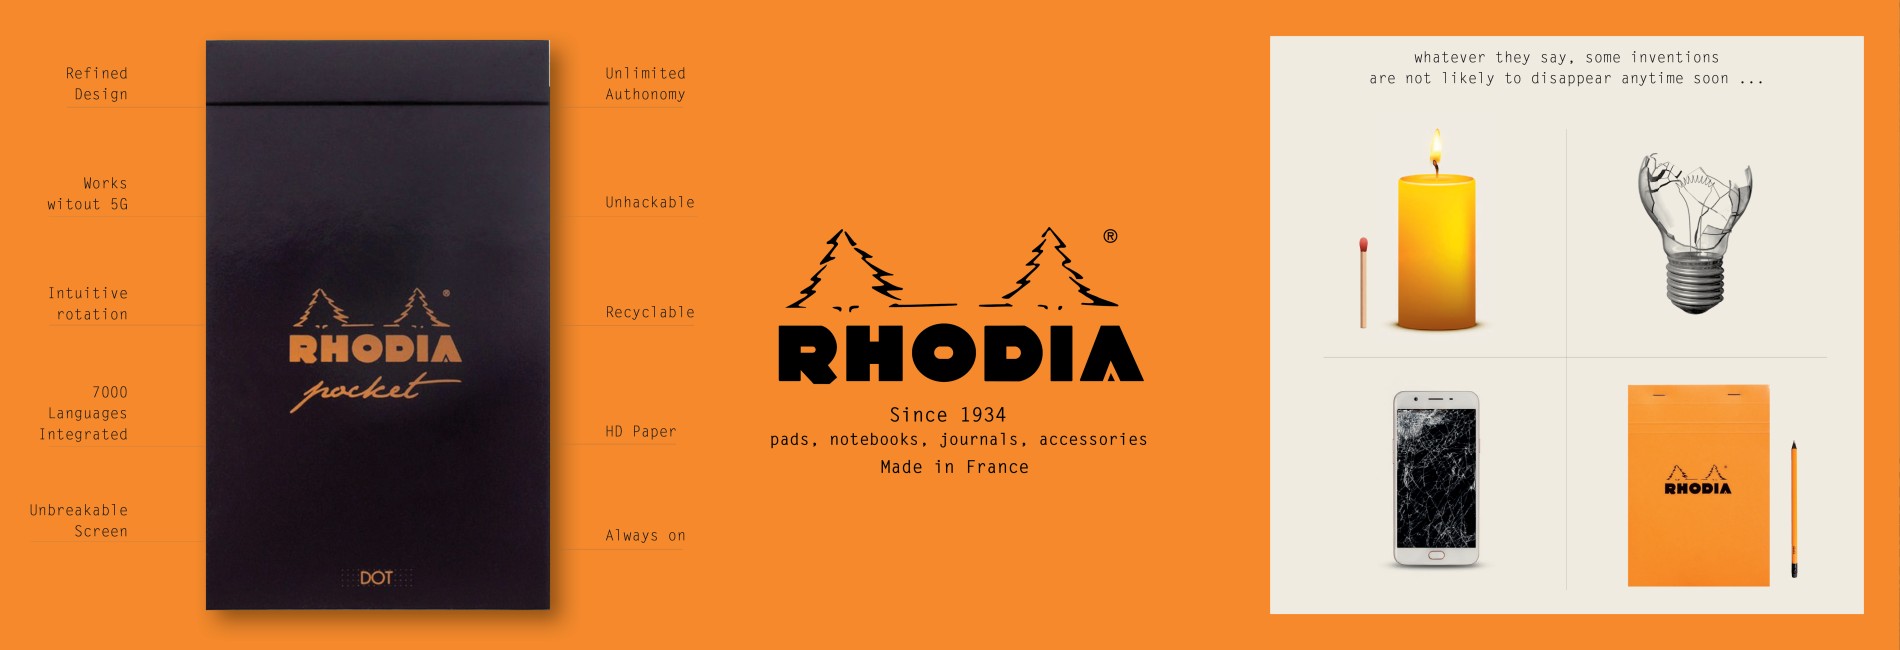 Rhodia Pads